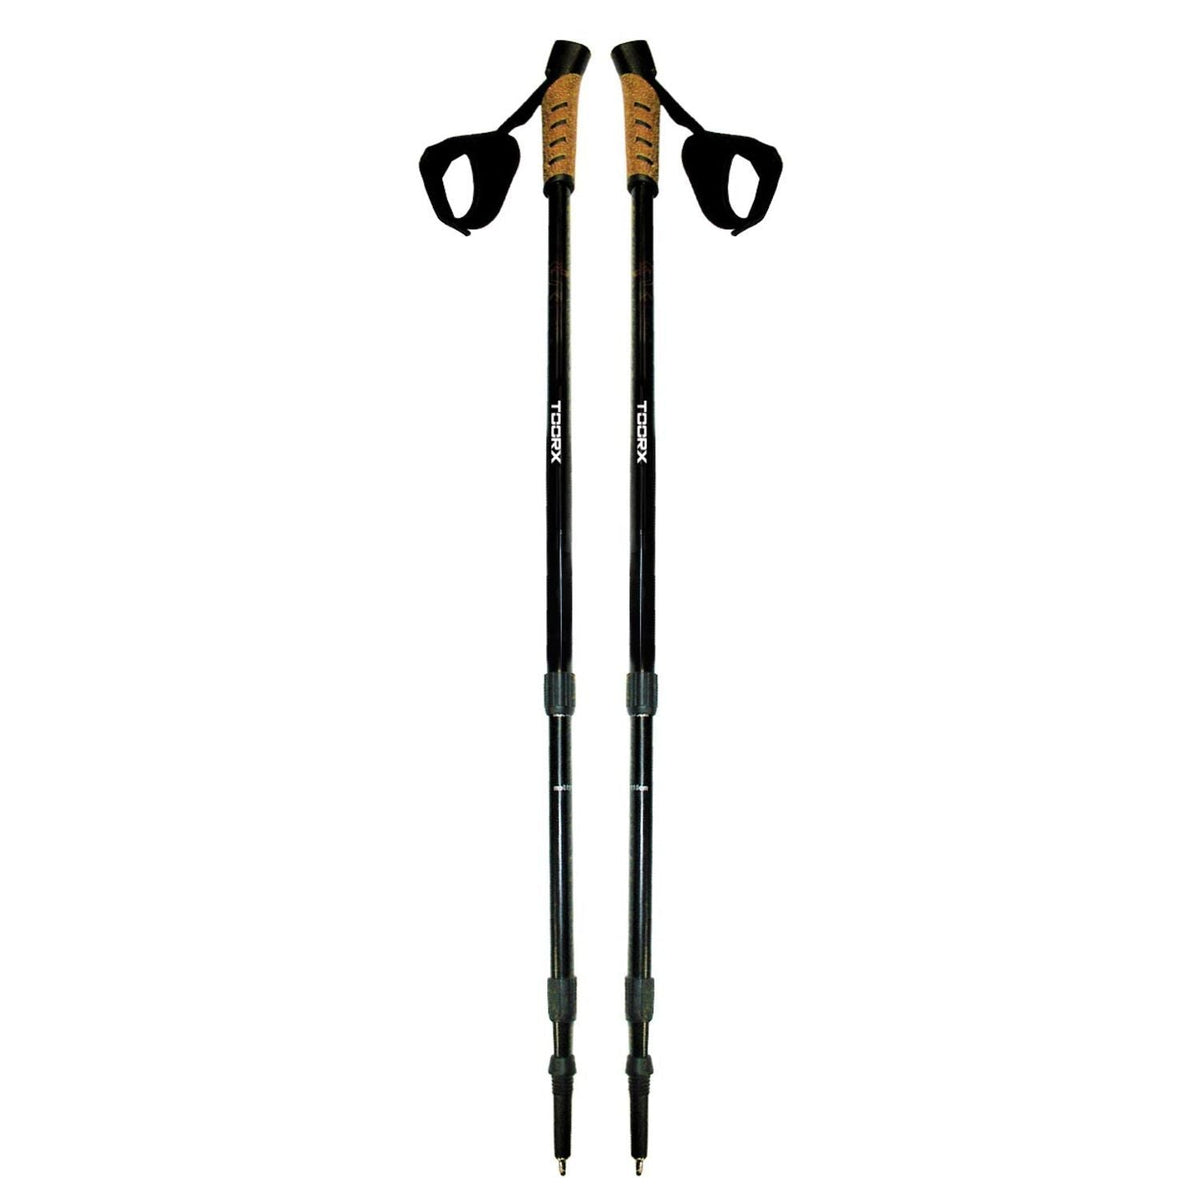 Pair of Nordic walking poles